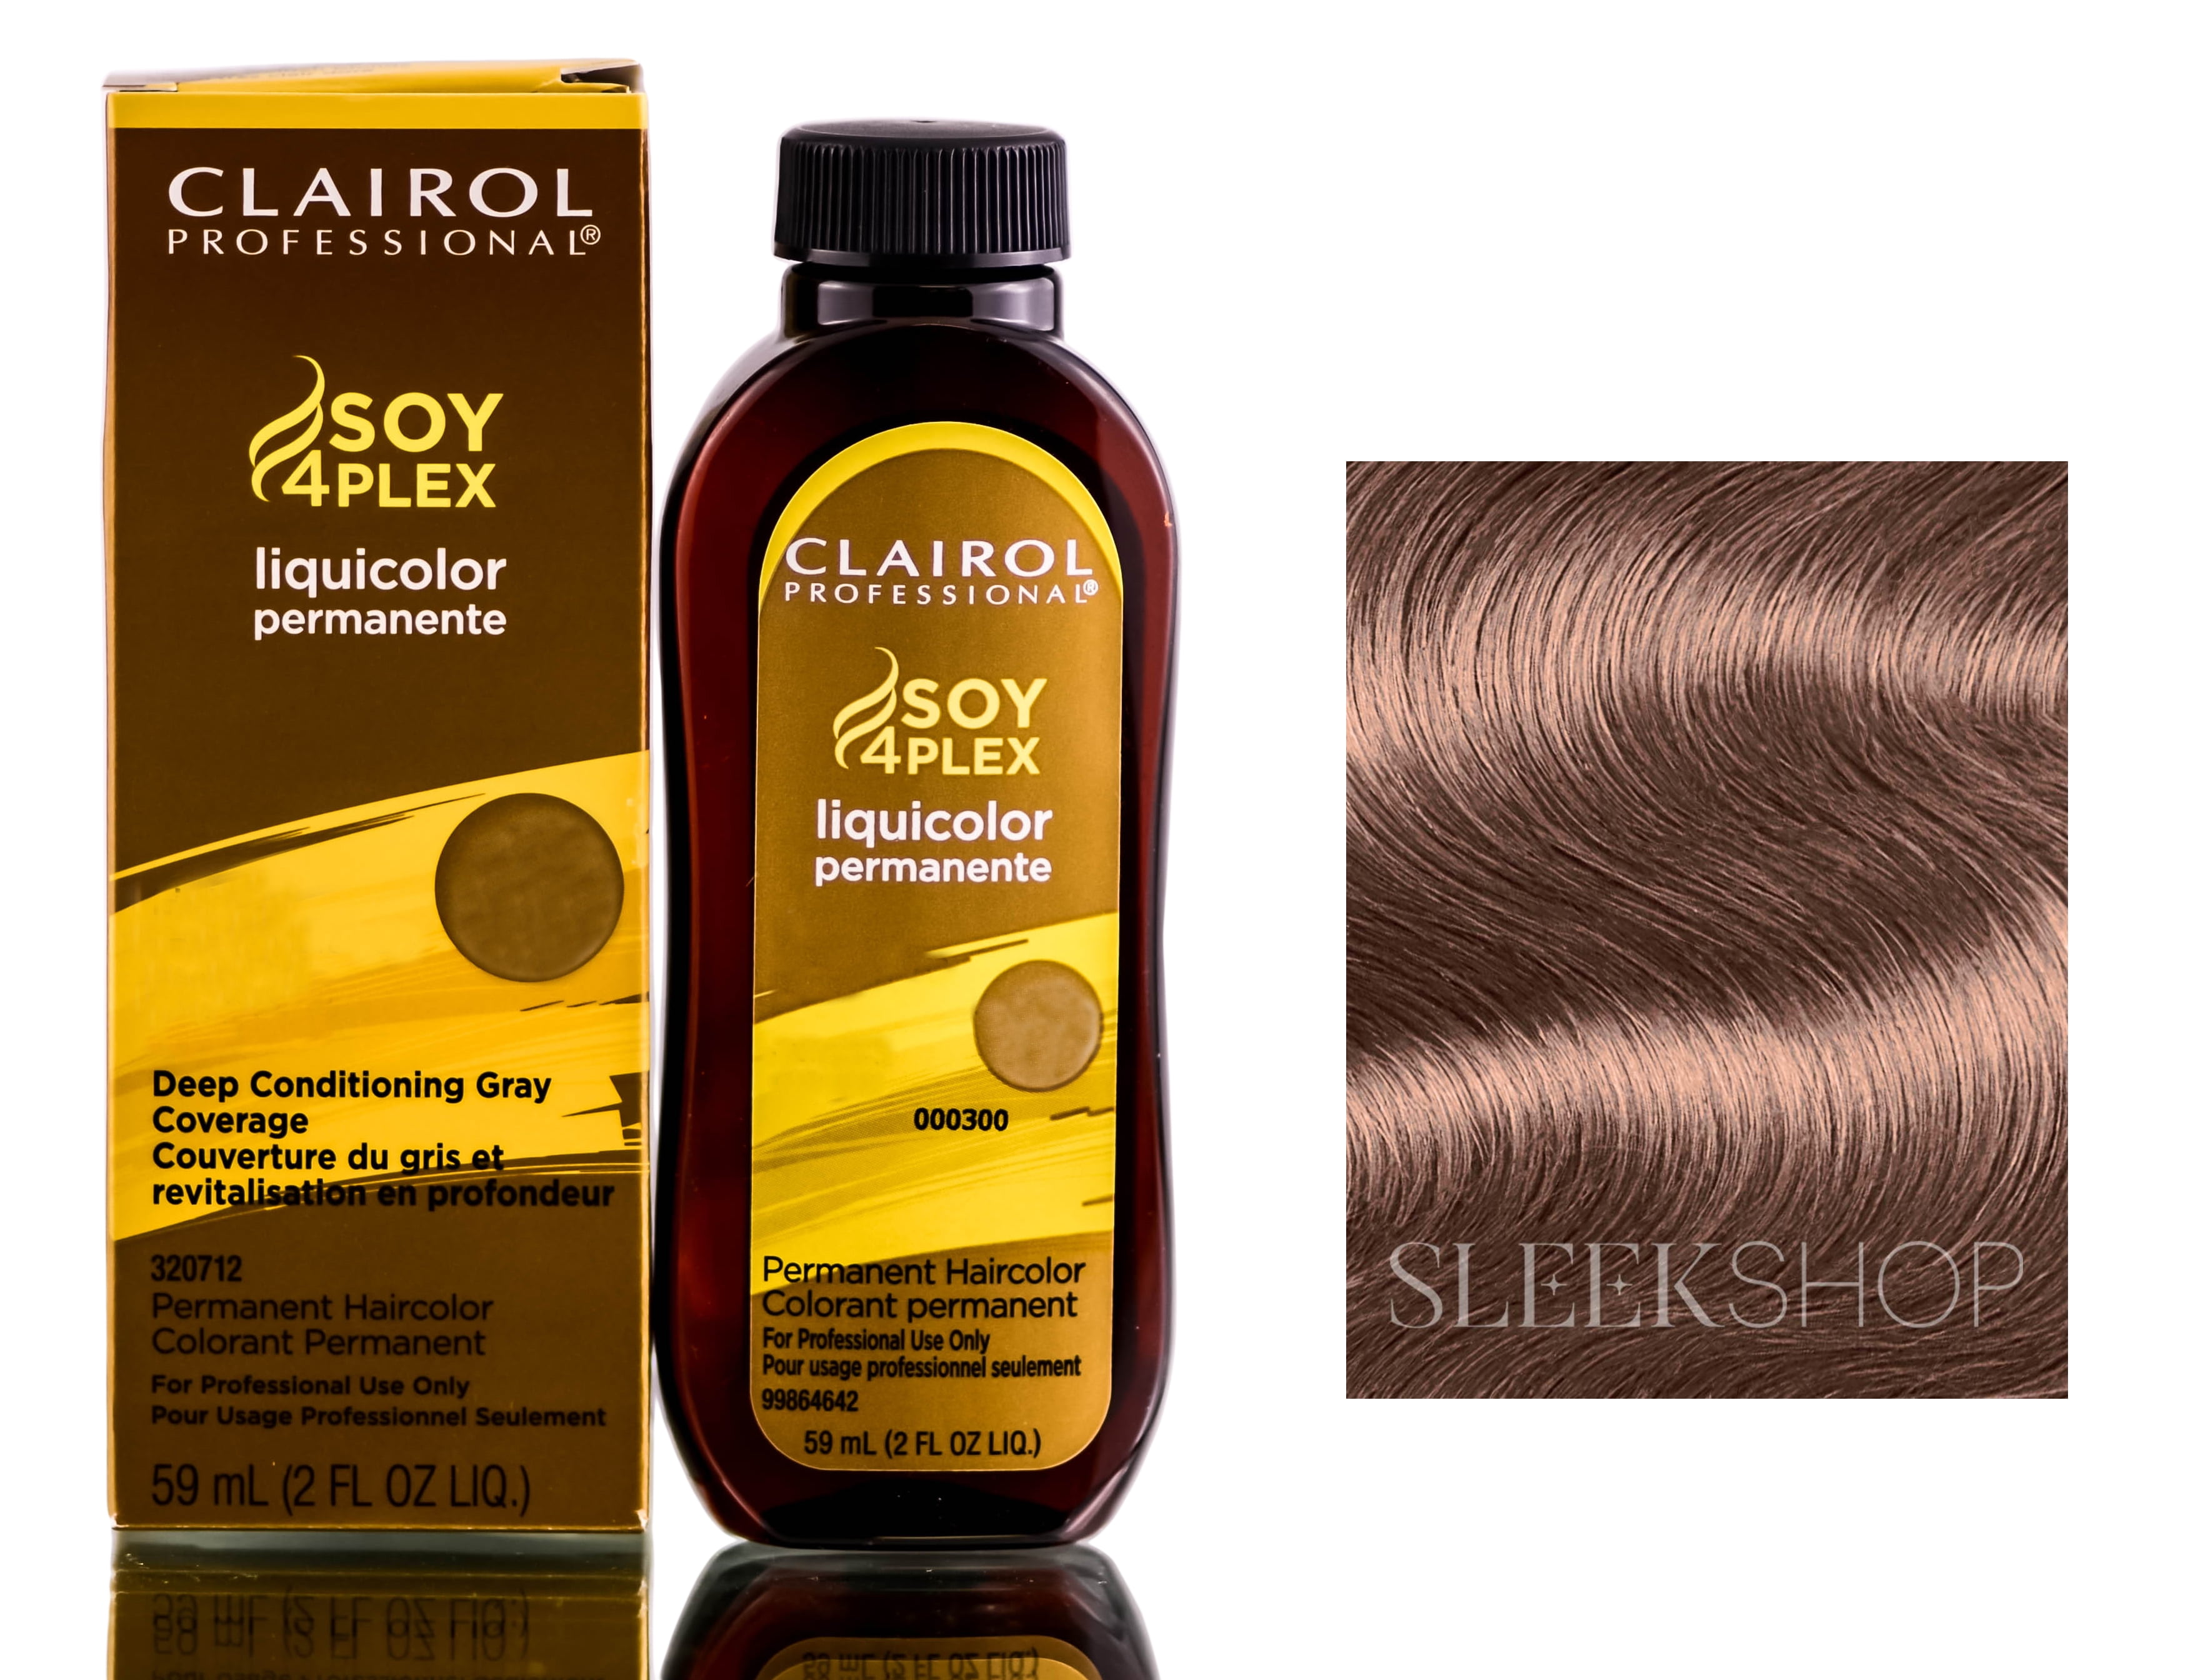 8. Clairol Professional Liquicolor Permanent Hair Color, 72hrs Blonde - wide 6